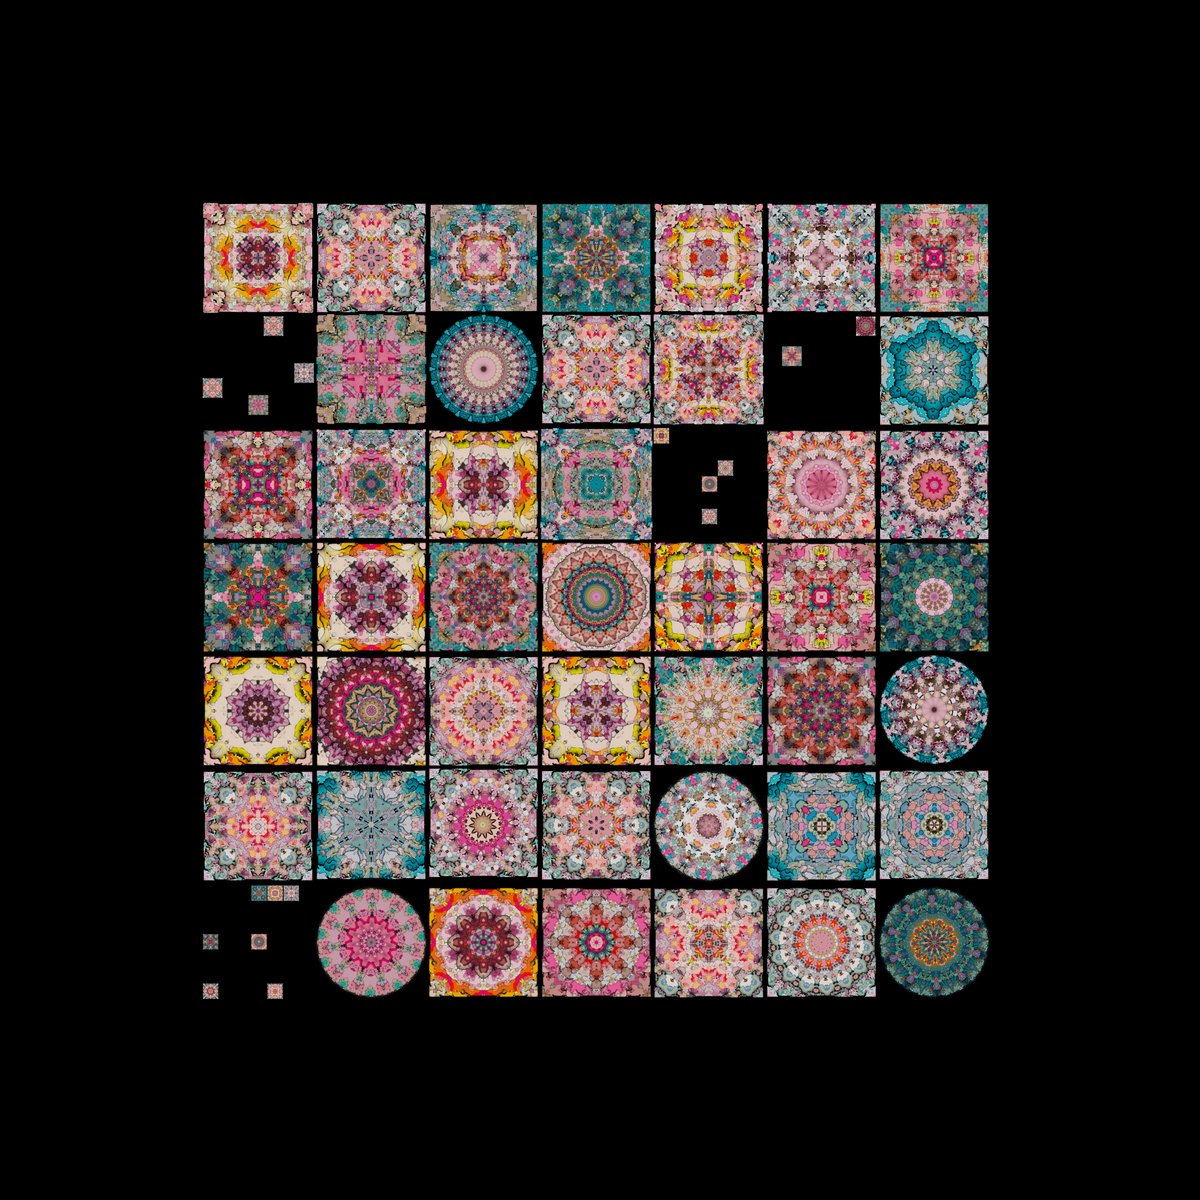 Gm mk04020_11 Mandelbrot's Kaleidoscope series on @exchgART